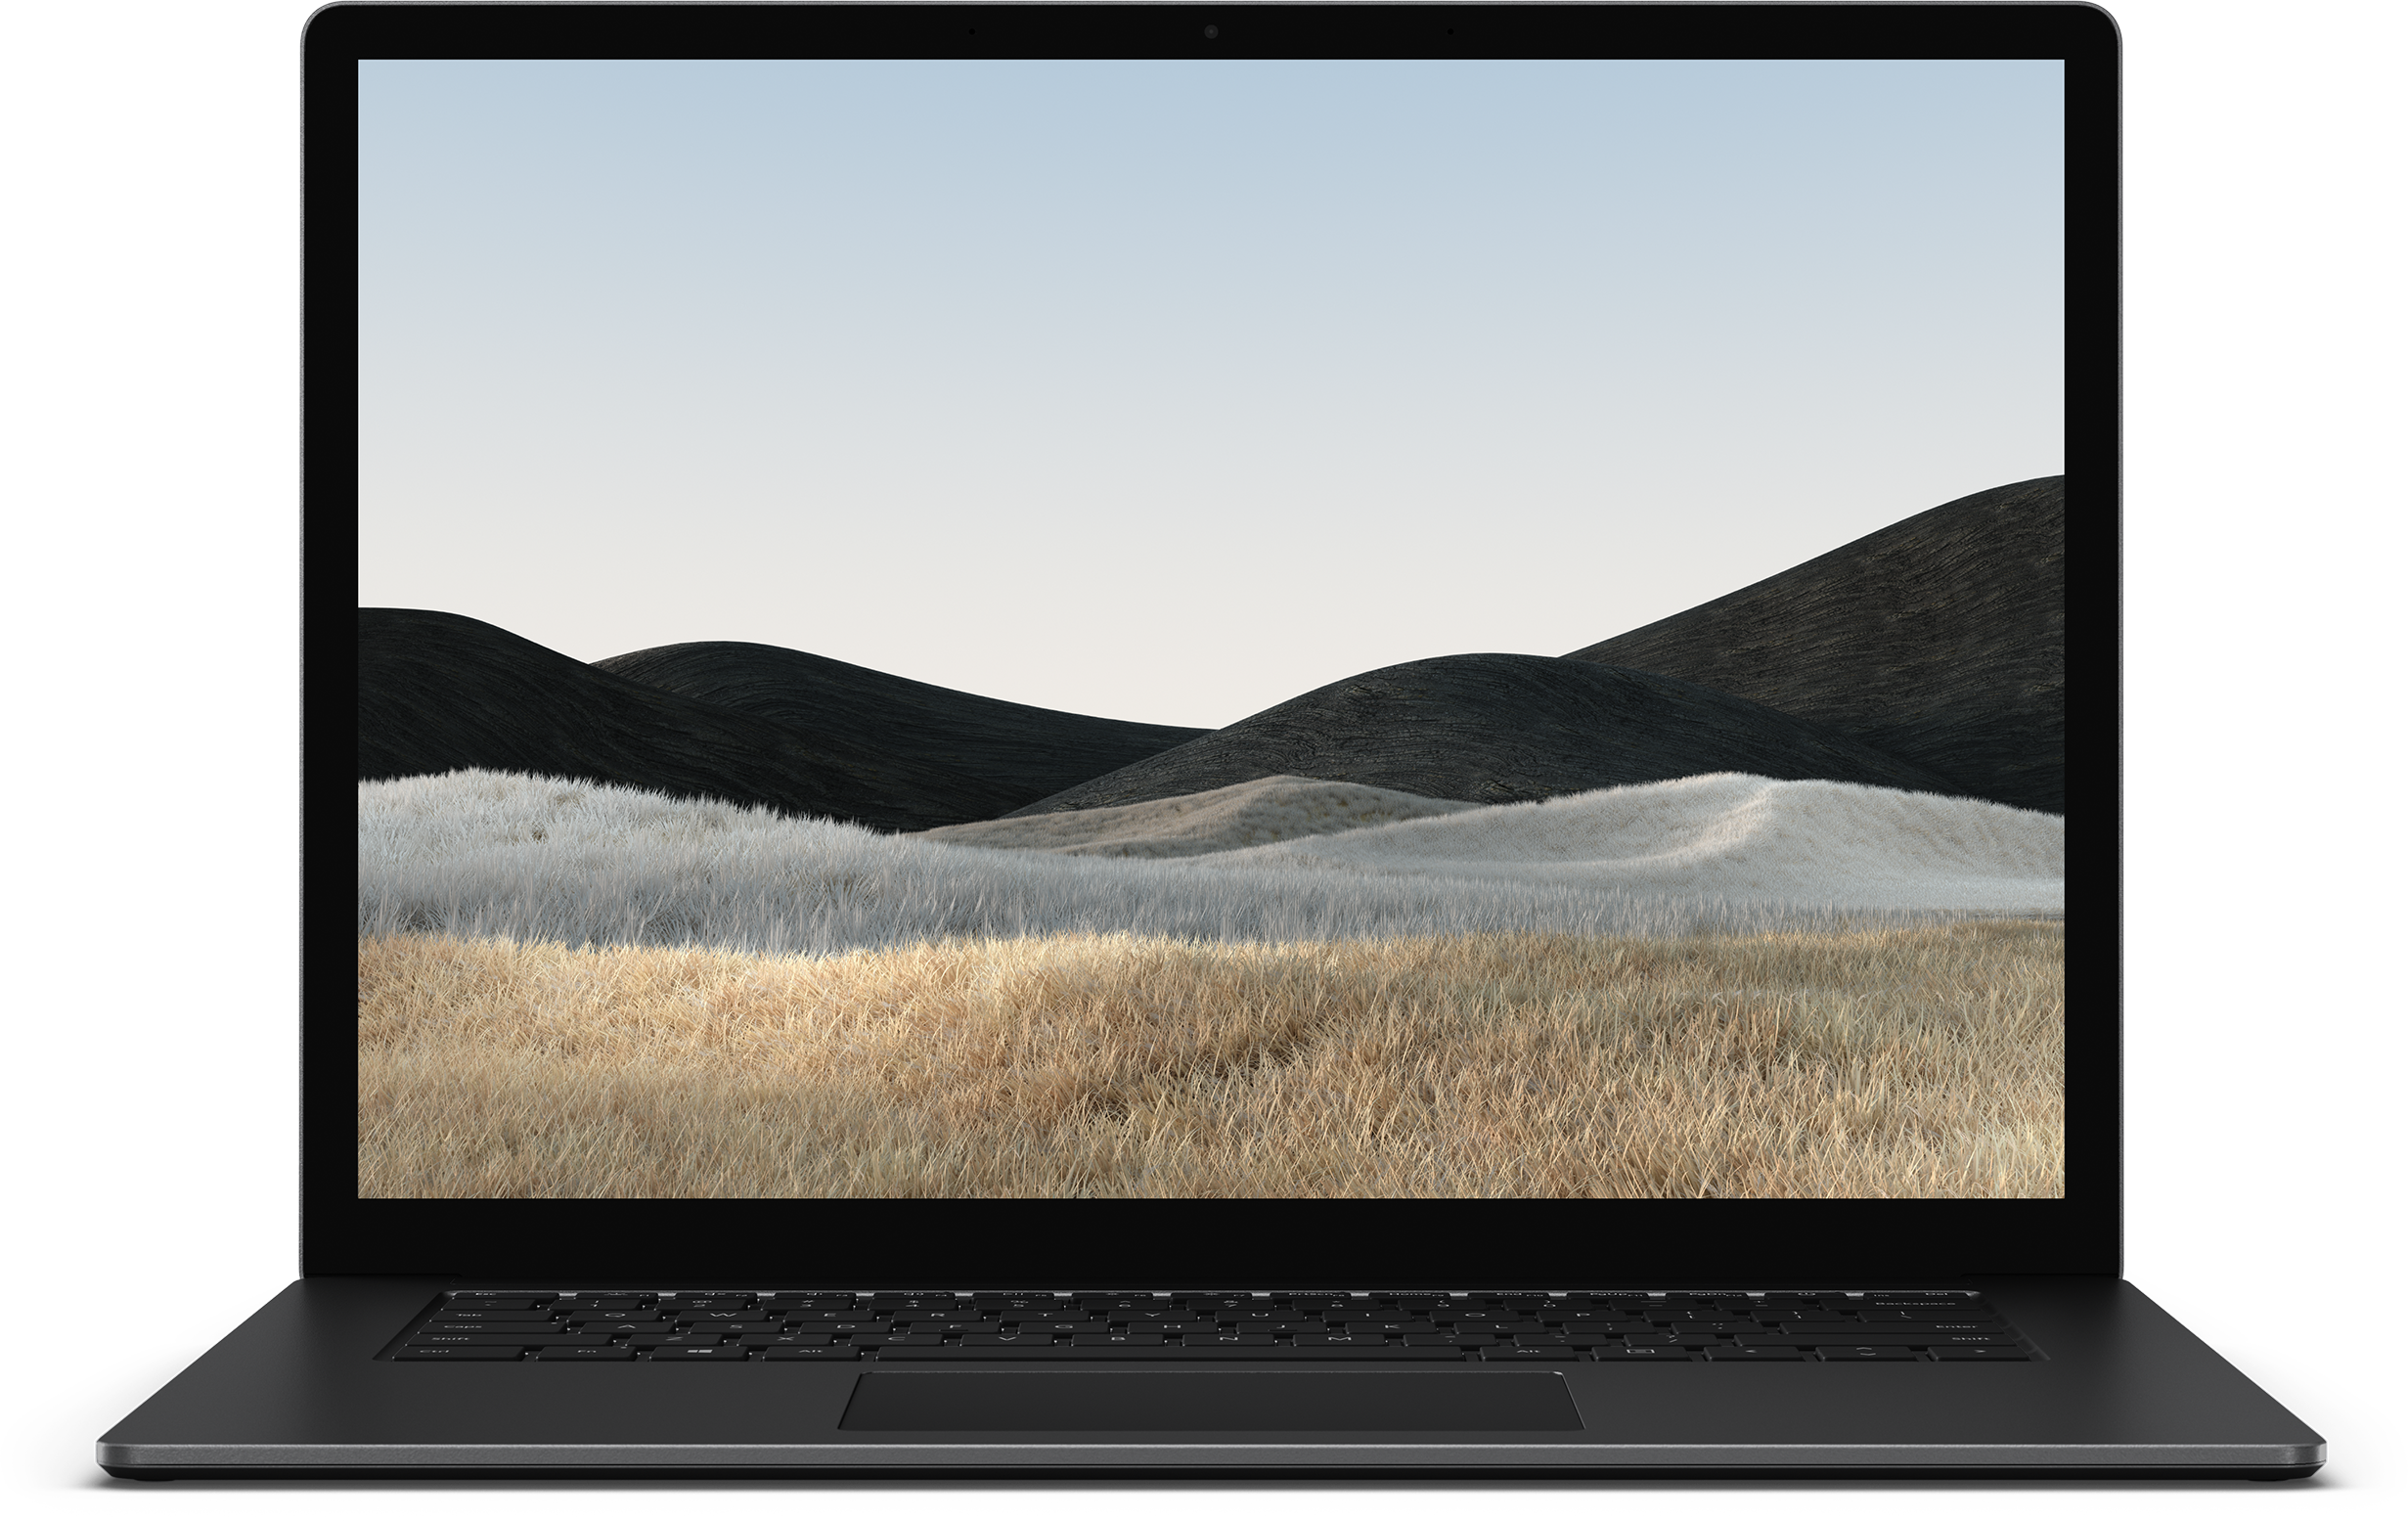 Surface Laptop 4 for Business - 13.5", Matte Black (Metal), Intel Core i5, 8GB RAM, 512GB SSD (Certified Refurbished)